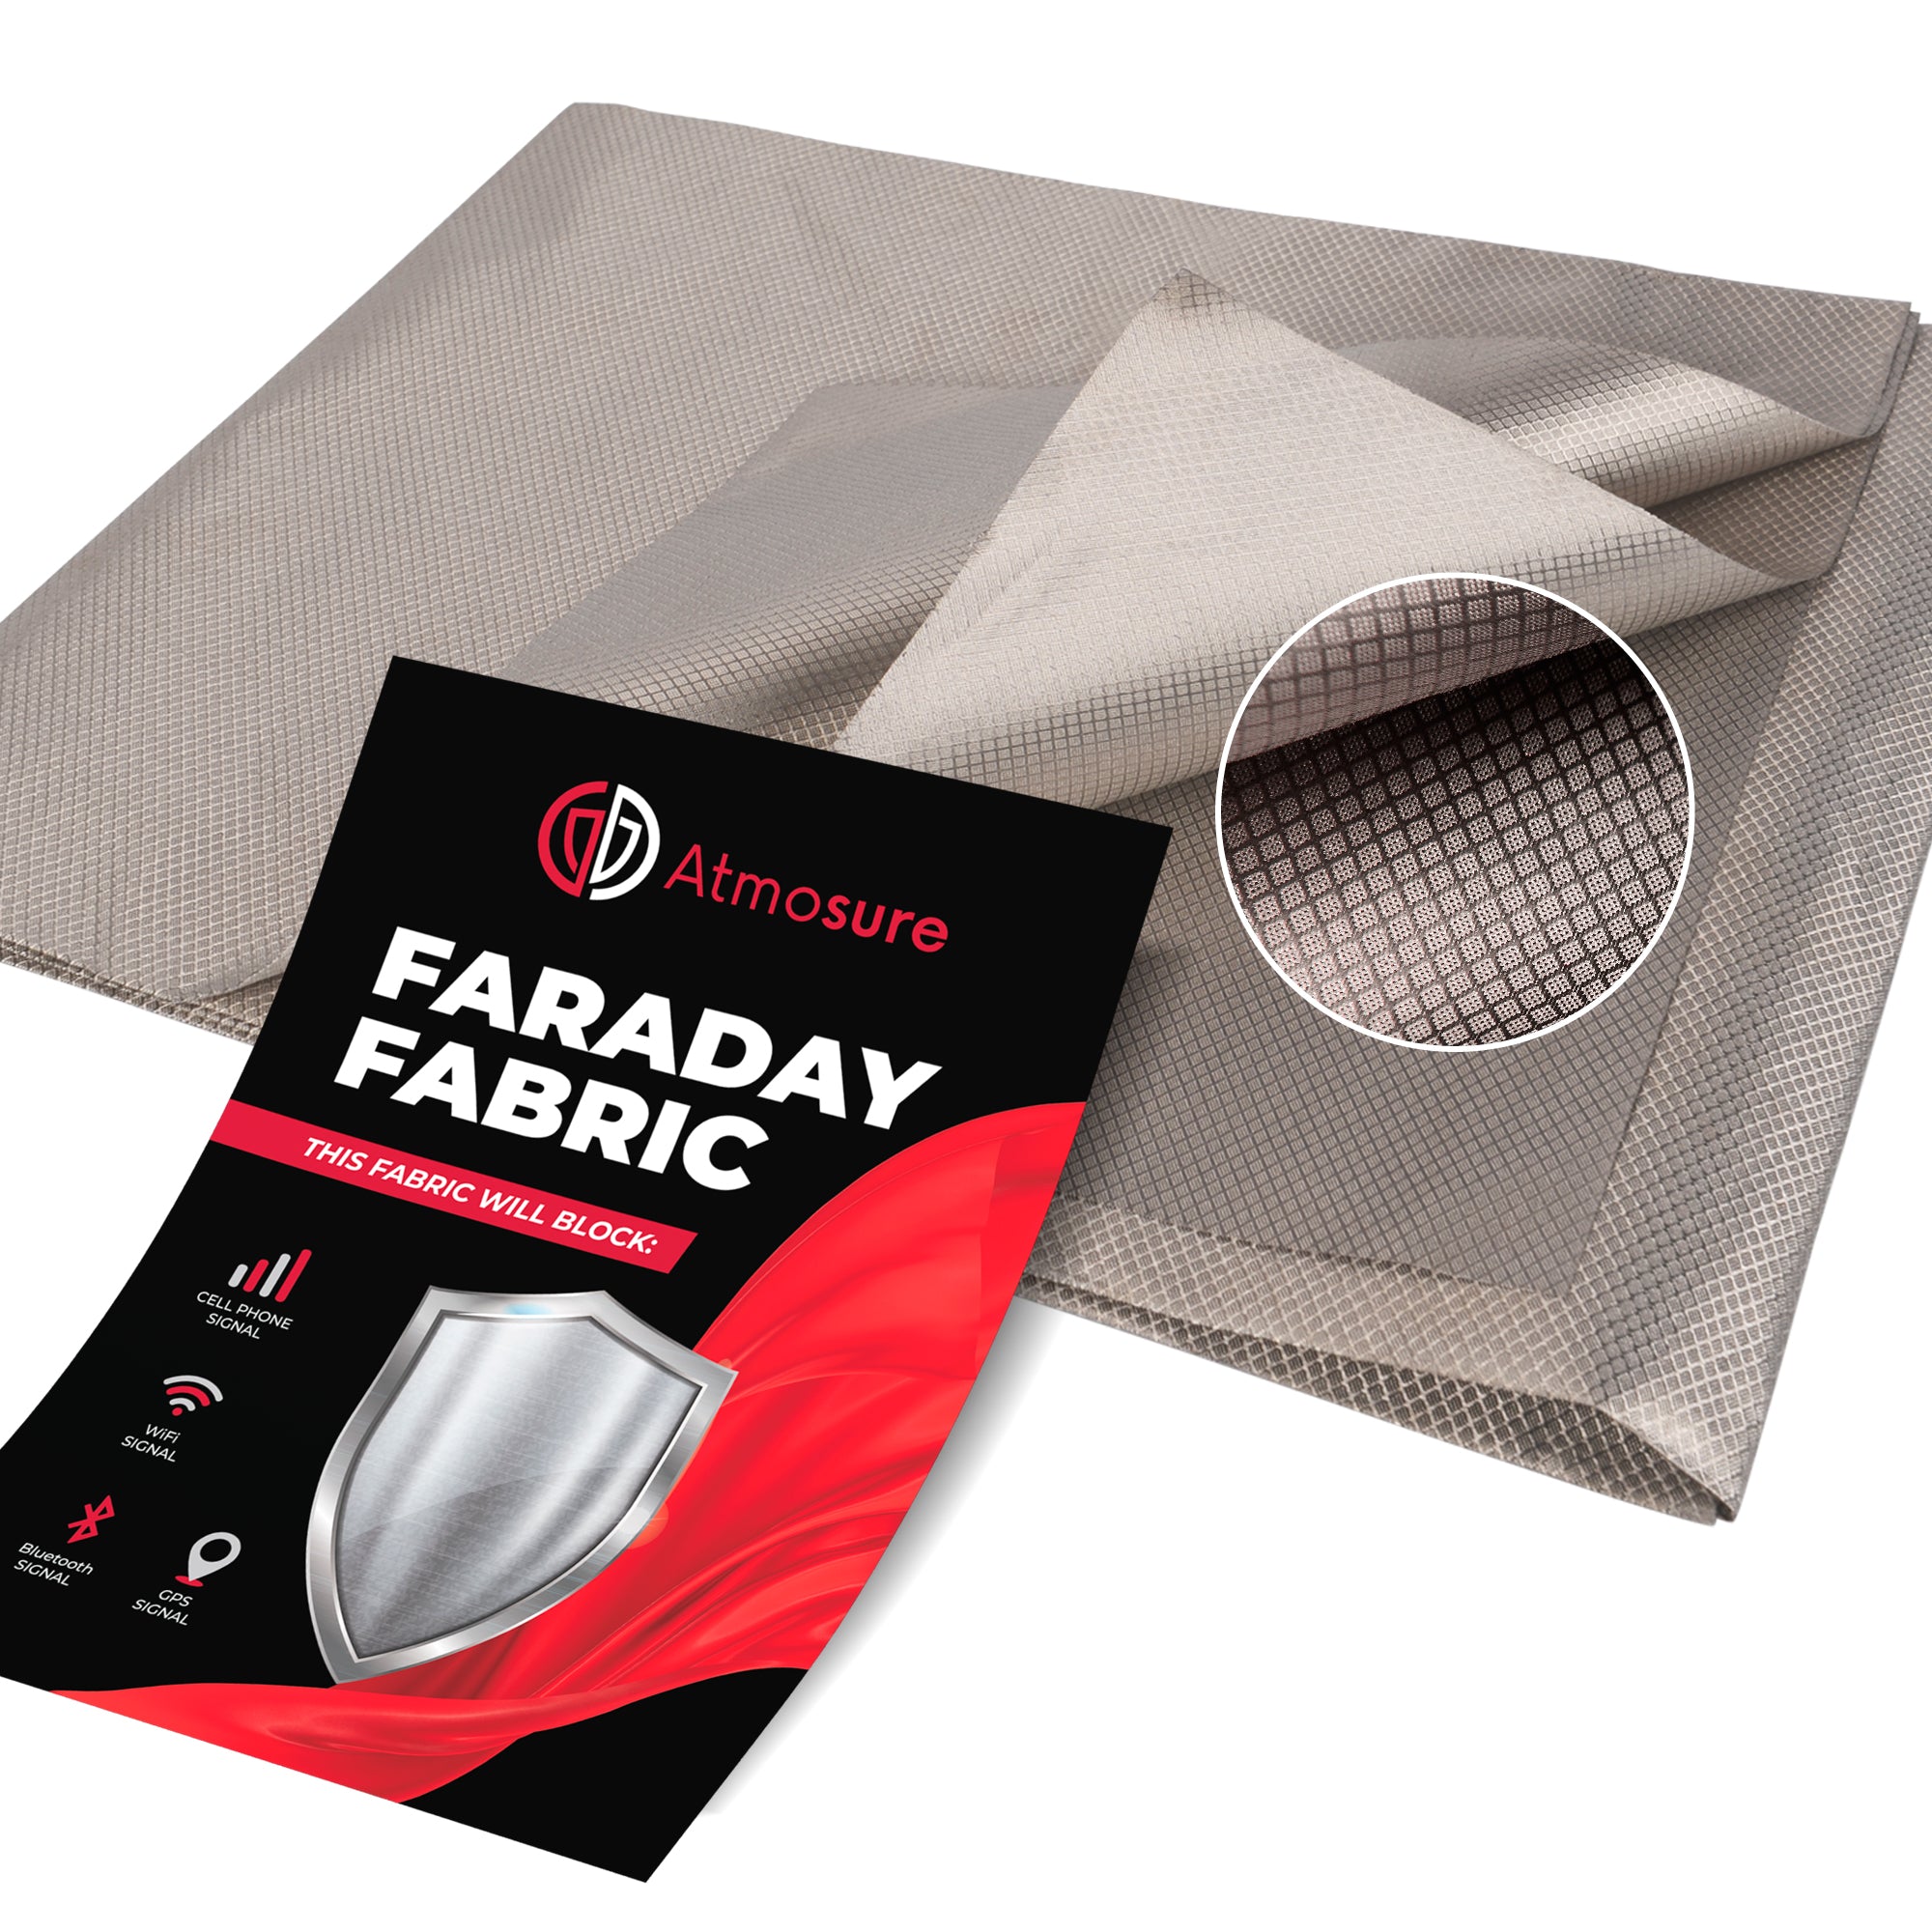 Papaba Anti Radiation Fabric,Anti Radiation Antimagnetic Lining Cloth  Blocking RFID Shielding Signal Fabric 